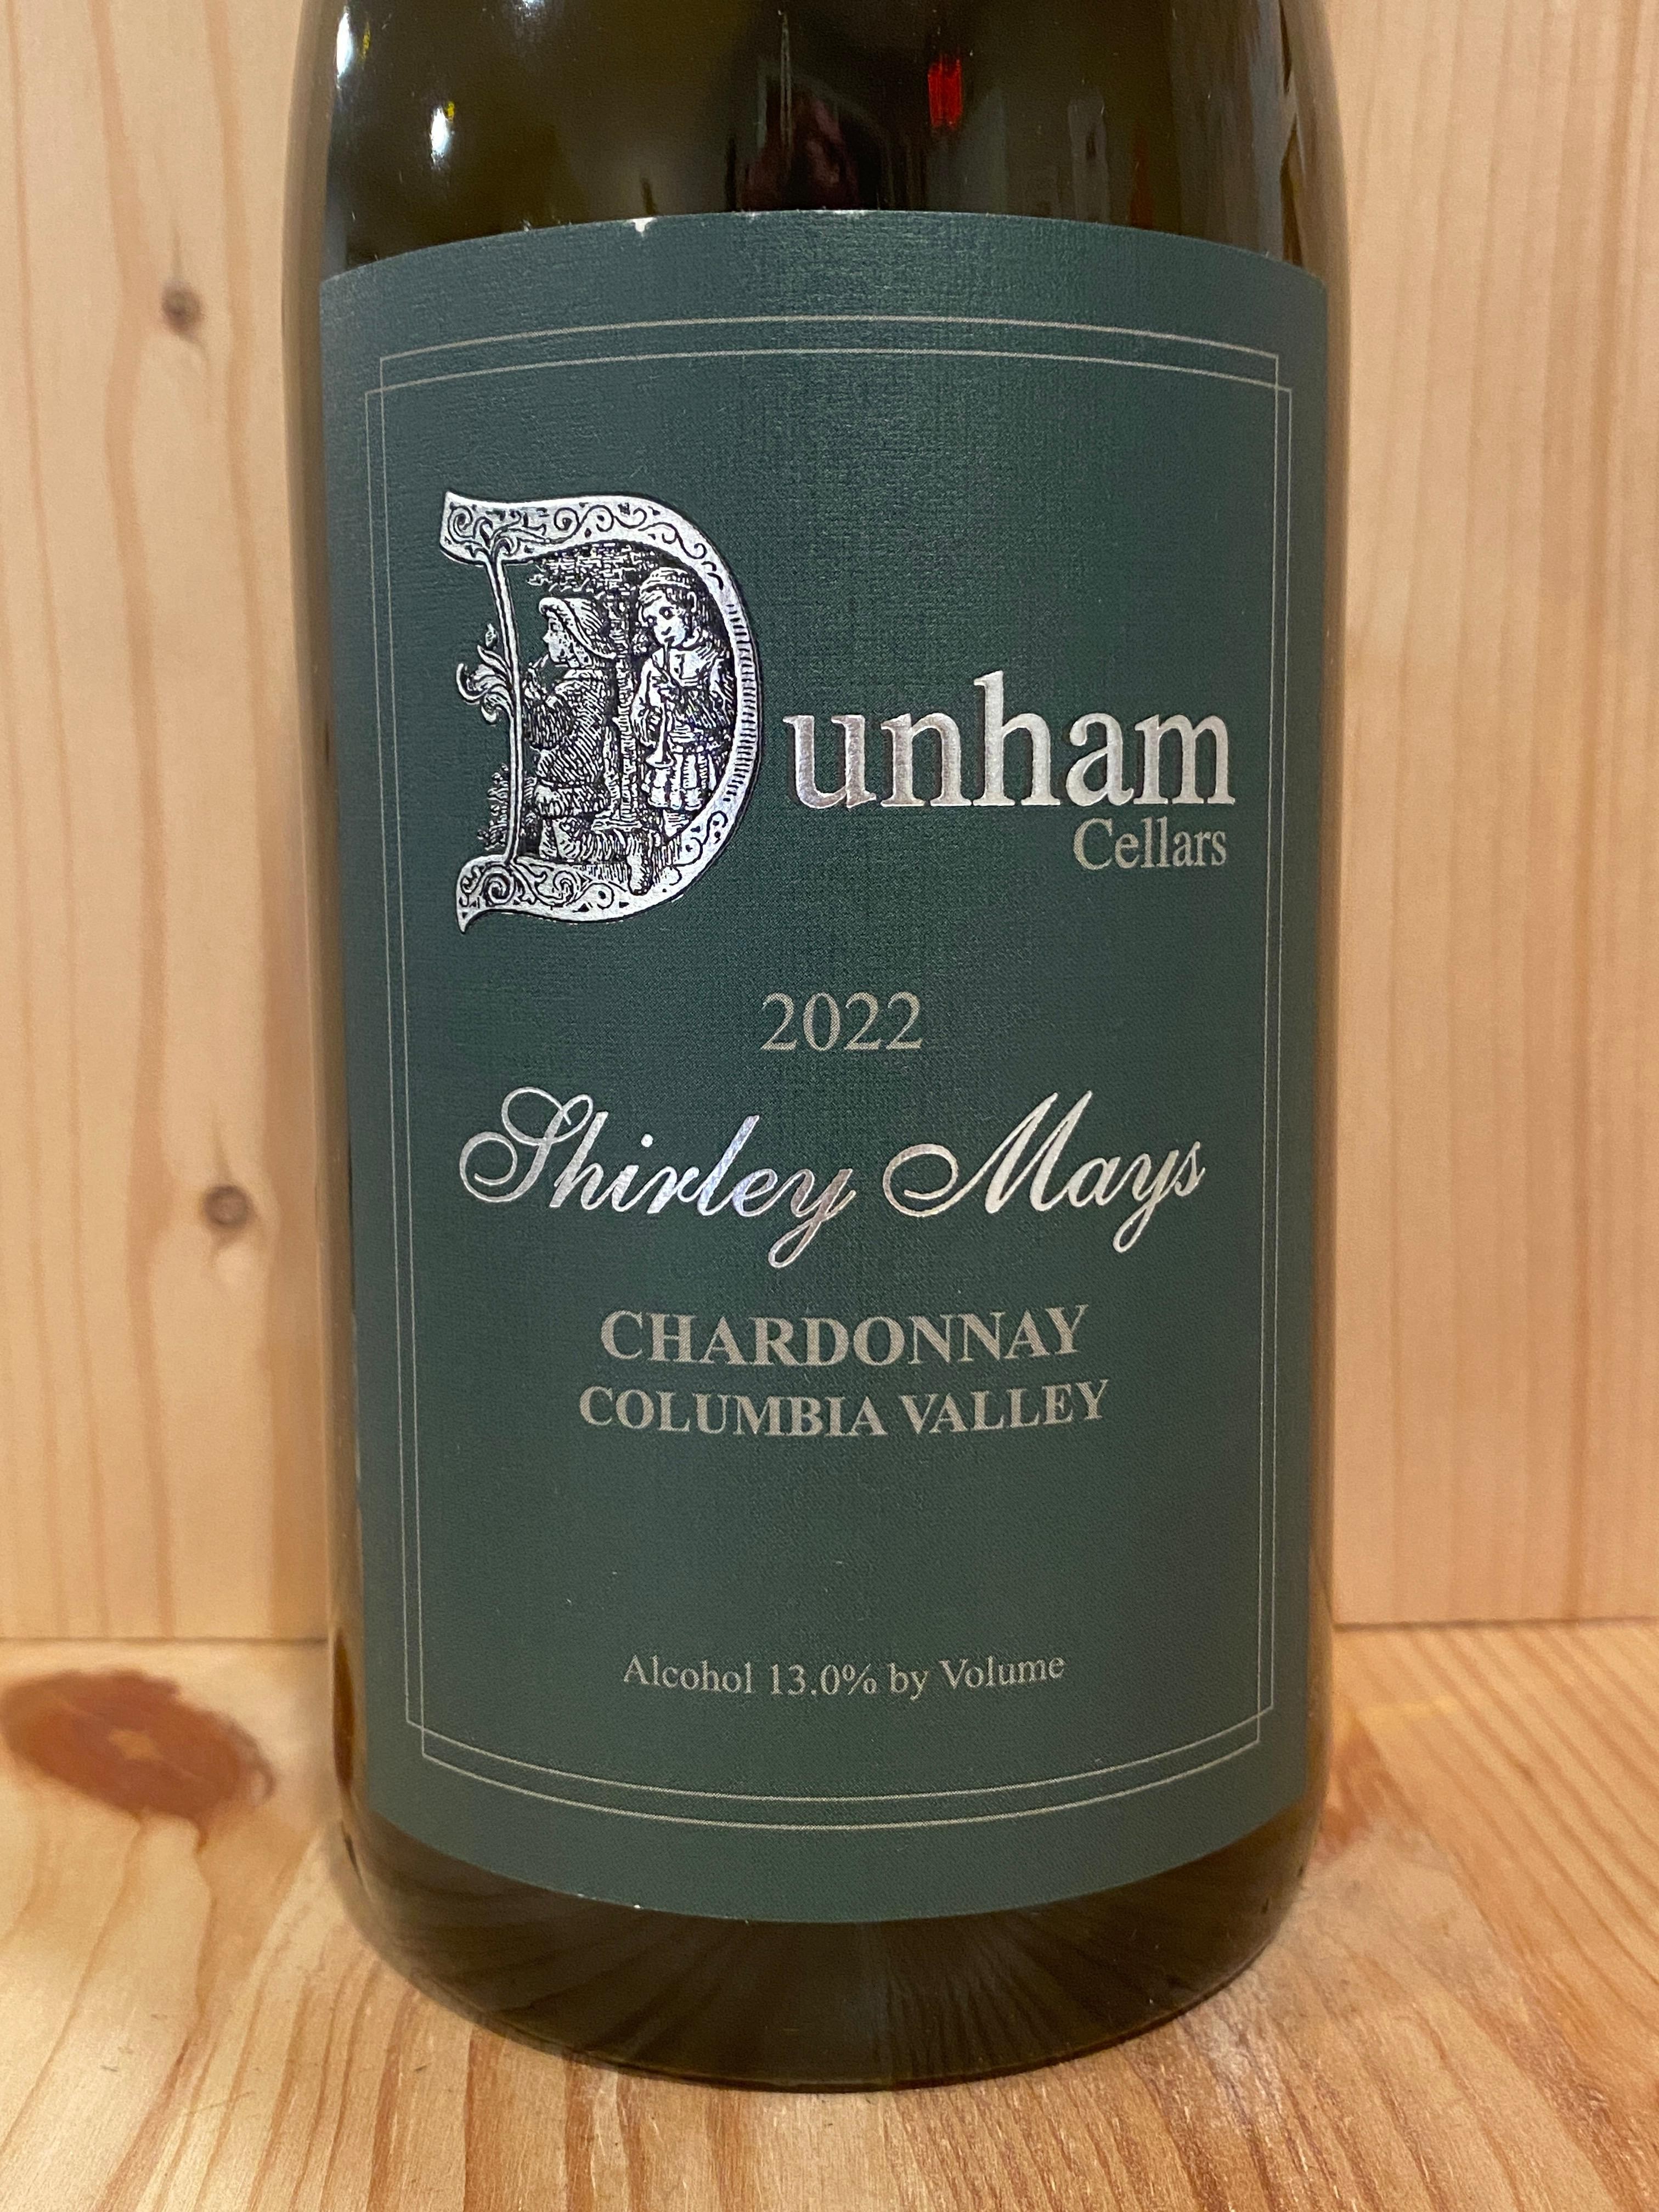 Dunham Cellars "Shirley Mays" Chardonnay 2022: Columbia Valley, Washington